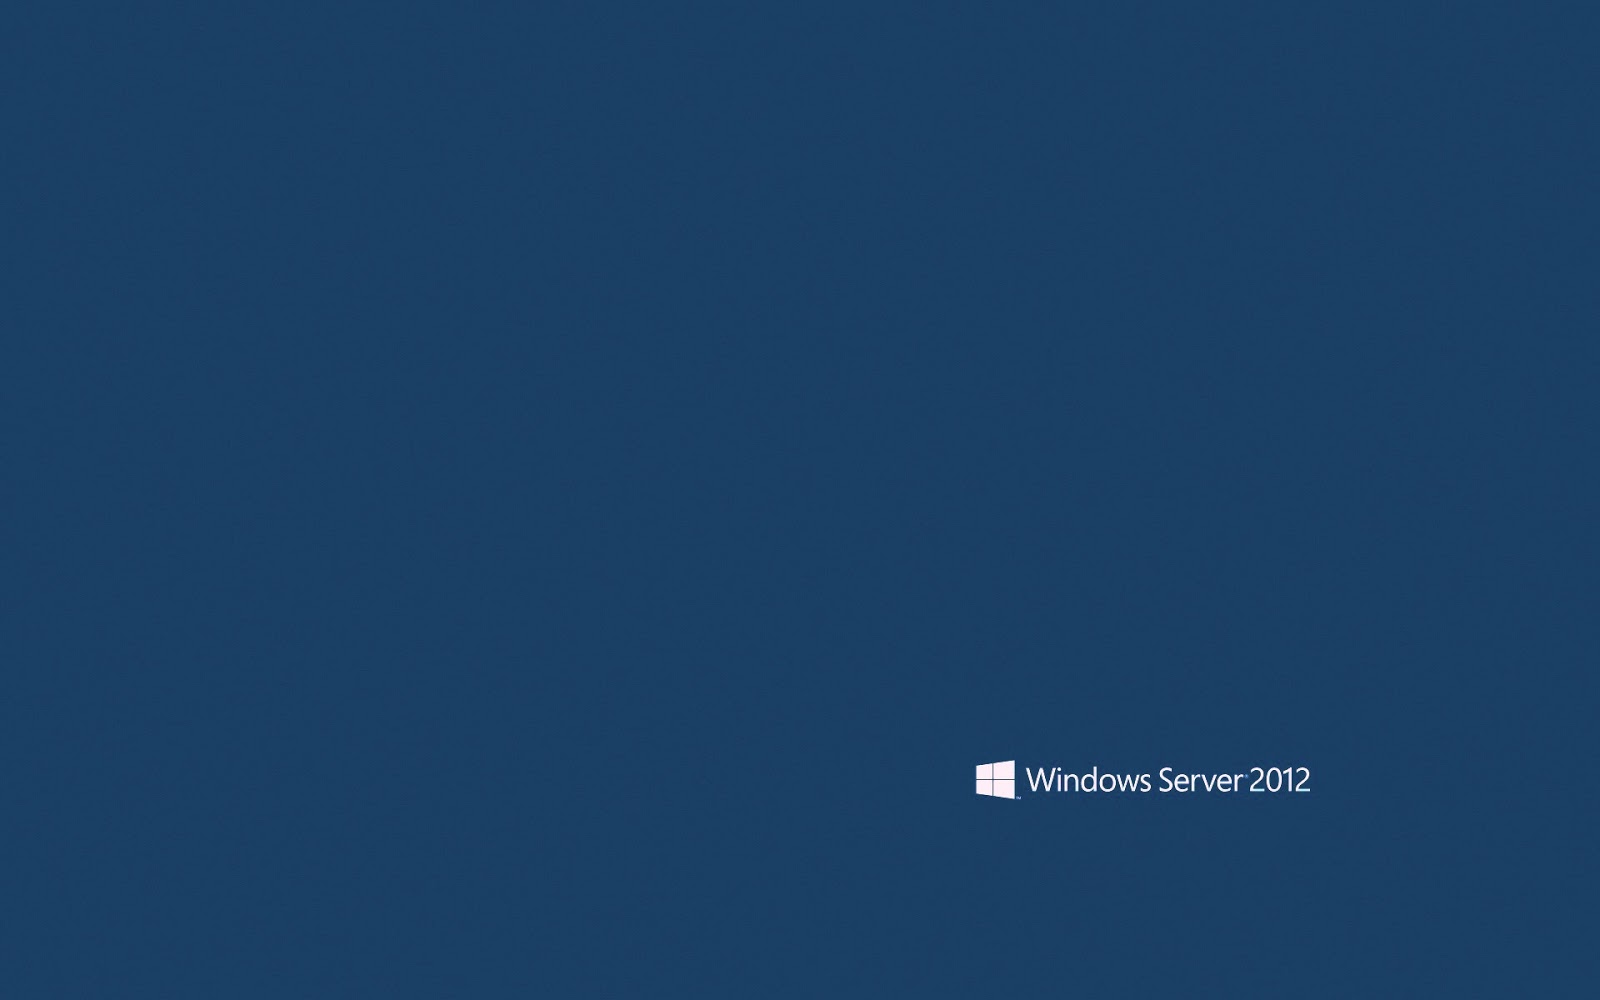 Windows Server 2012 Wallpaper Collection Windows Server 2012